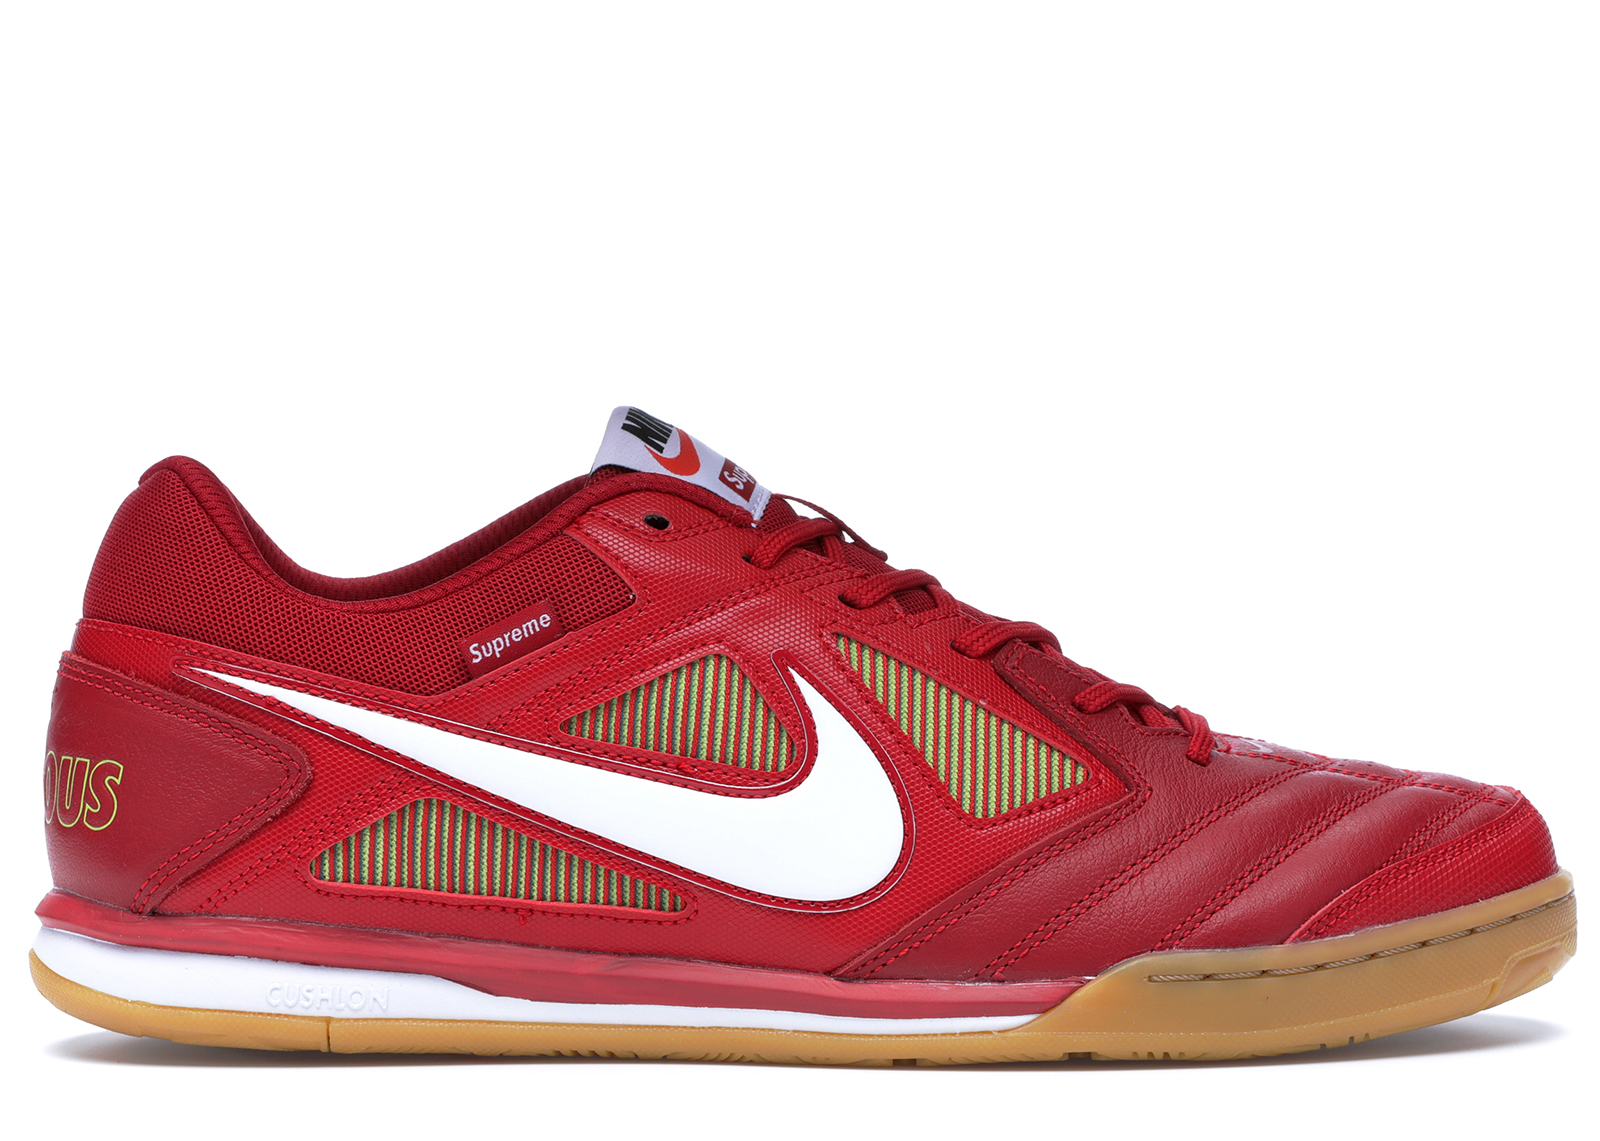 Nike SB Gato Supreme Red - AR9821-600 - US